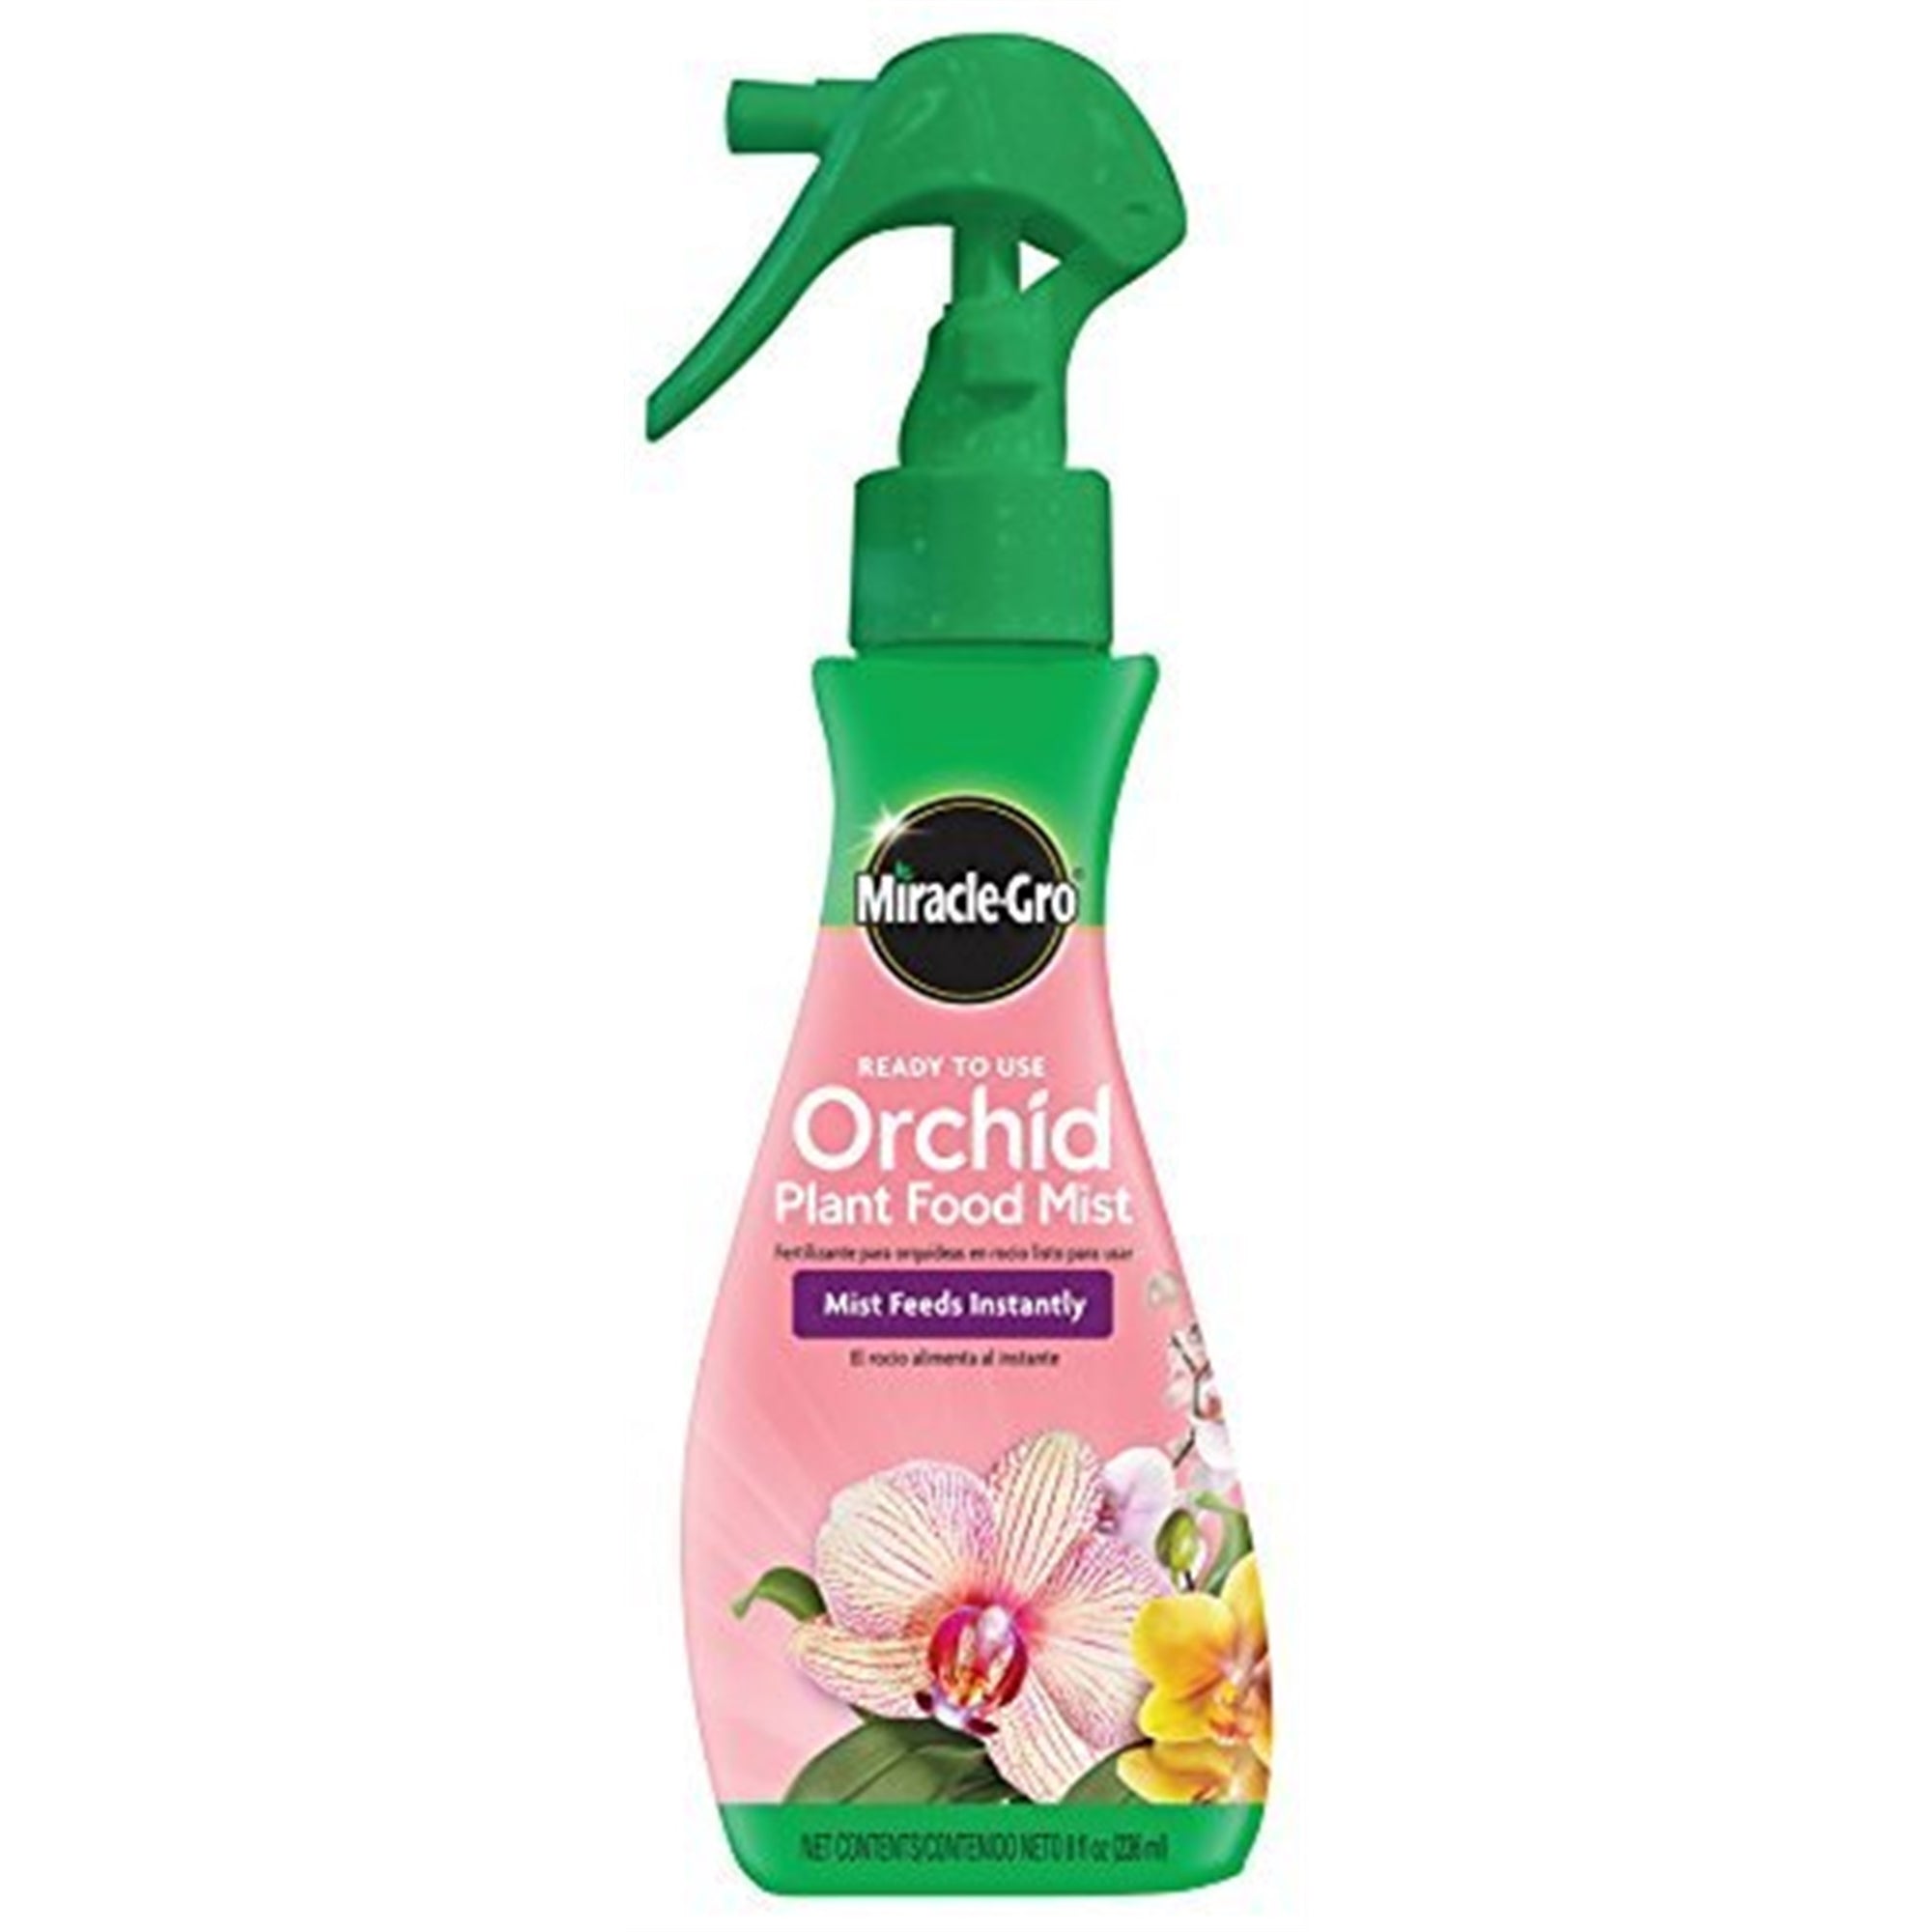 Miracle-Gro Orchid Plant Food Mist (Orchid Fertilizer) 8 oz.